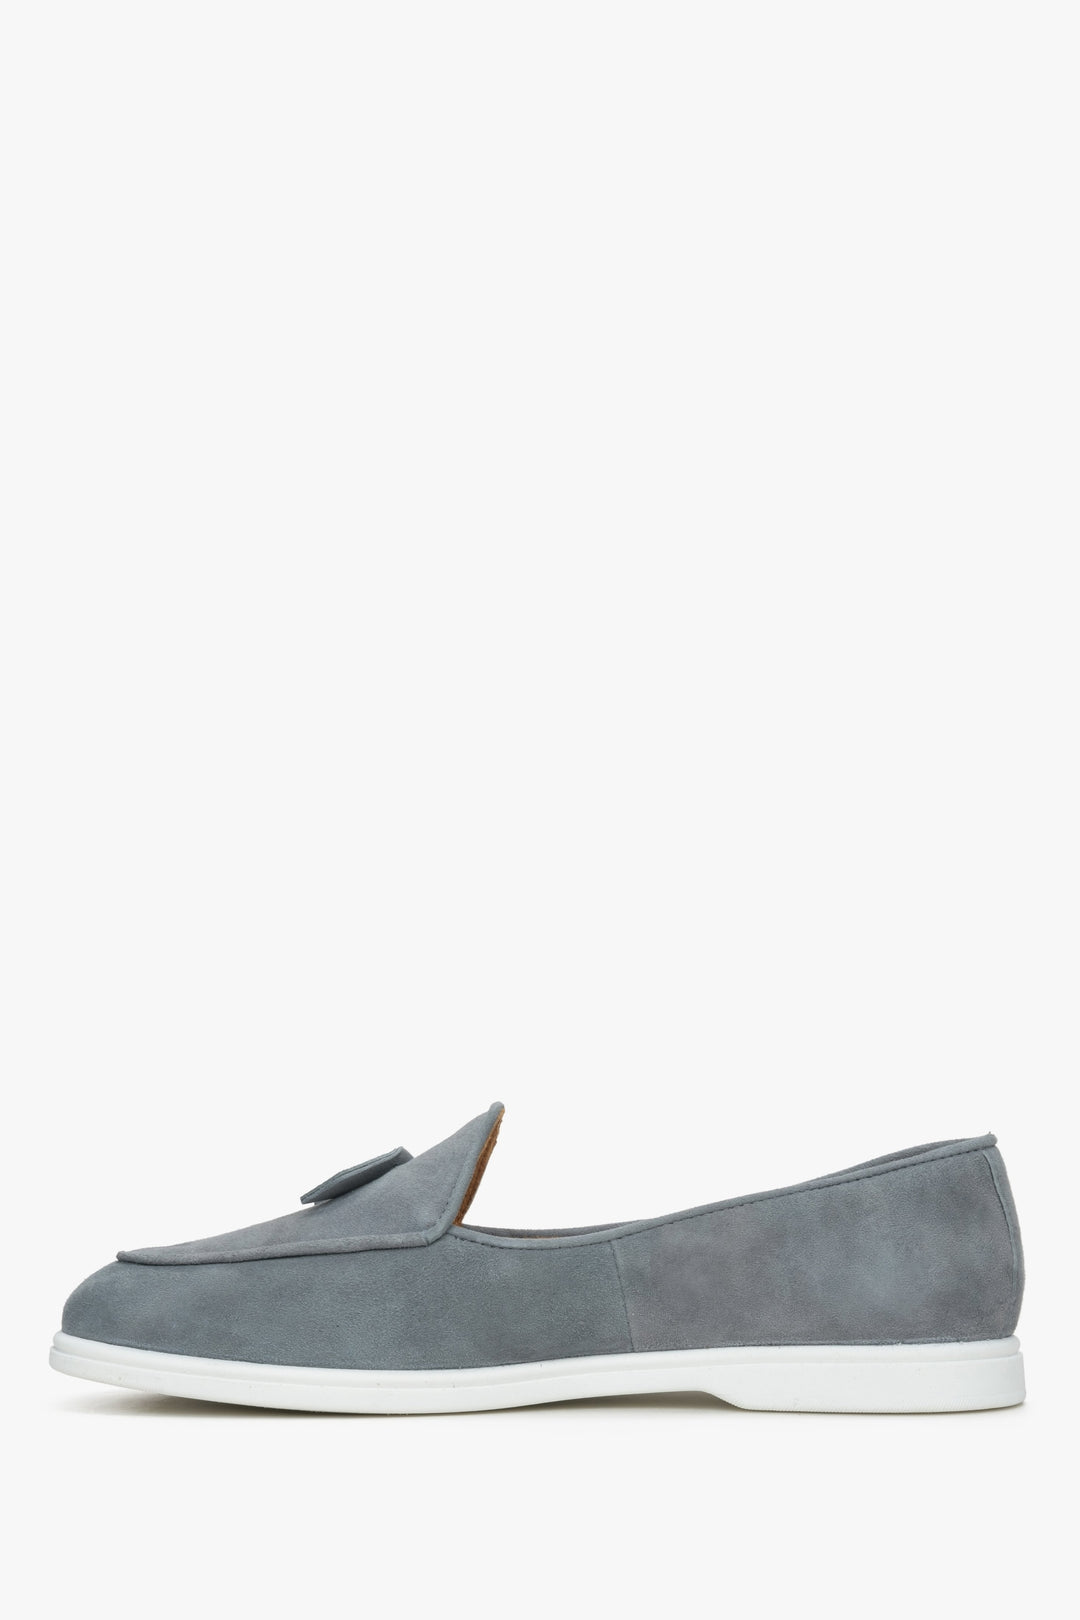 Women's grey moccasins of genuine velour by Estro - shoe profile.